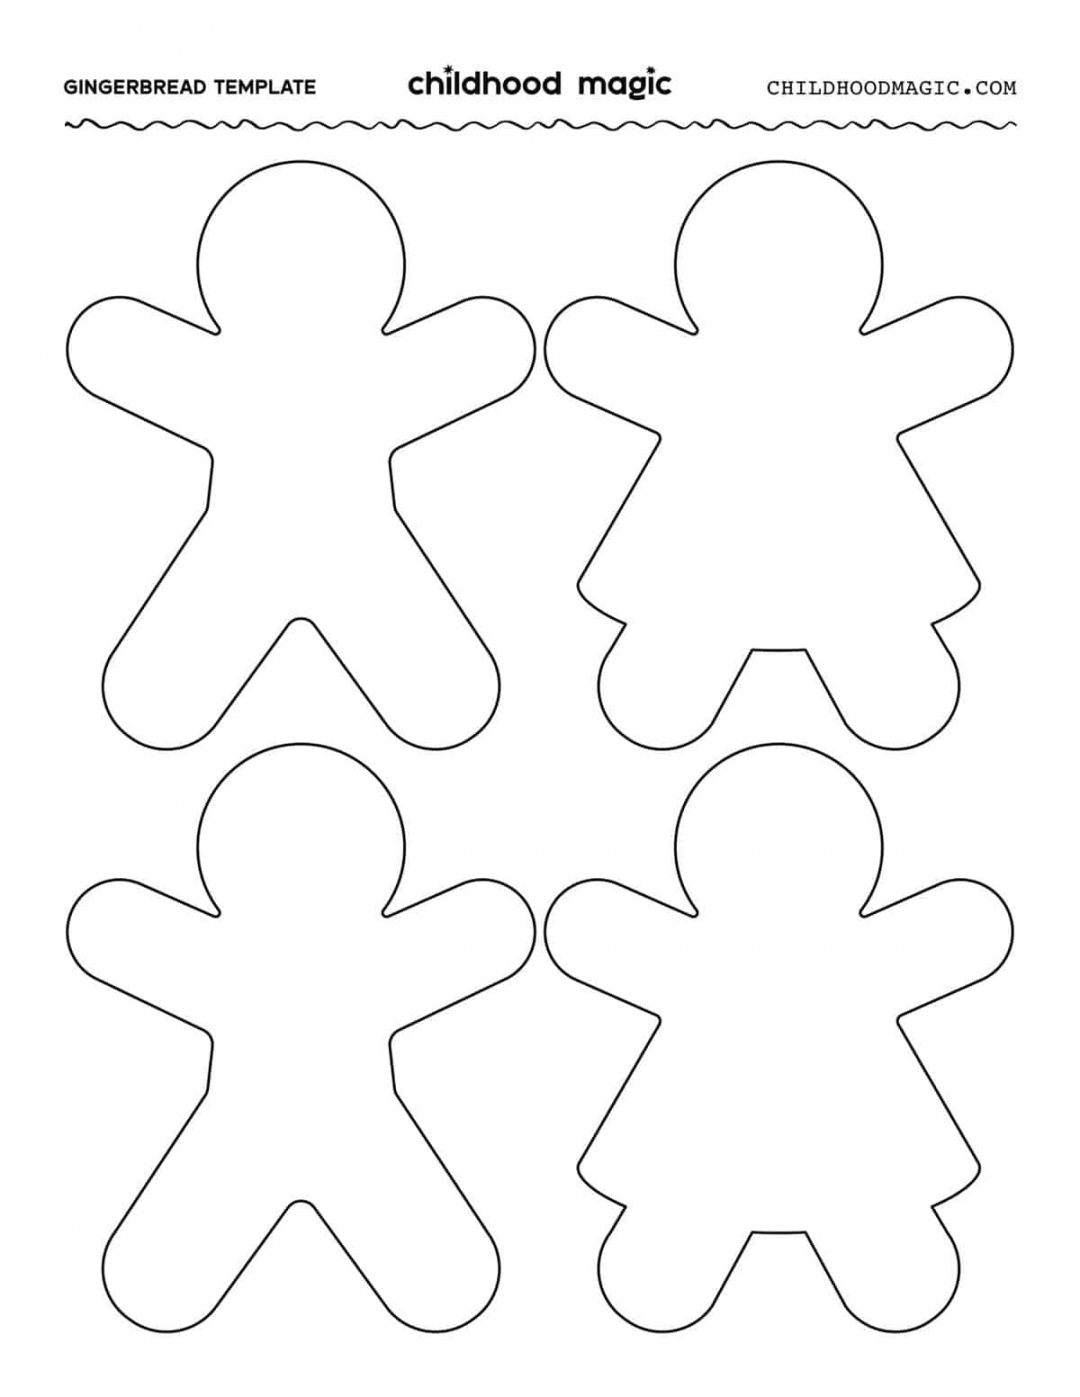 Gingerbread Man Template - Free Printable - Childhood Magic - FREE Printables - Printable Gingerbread Man Template